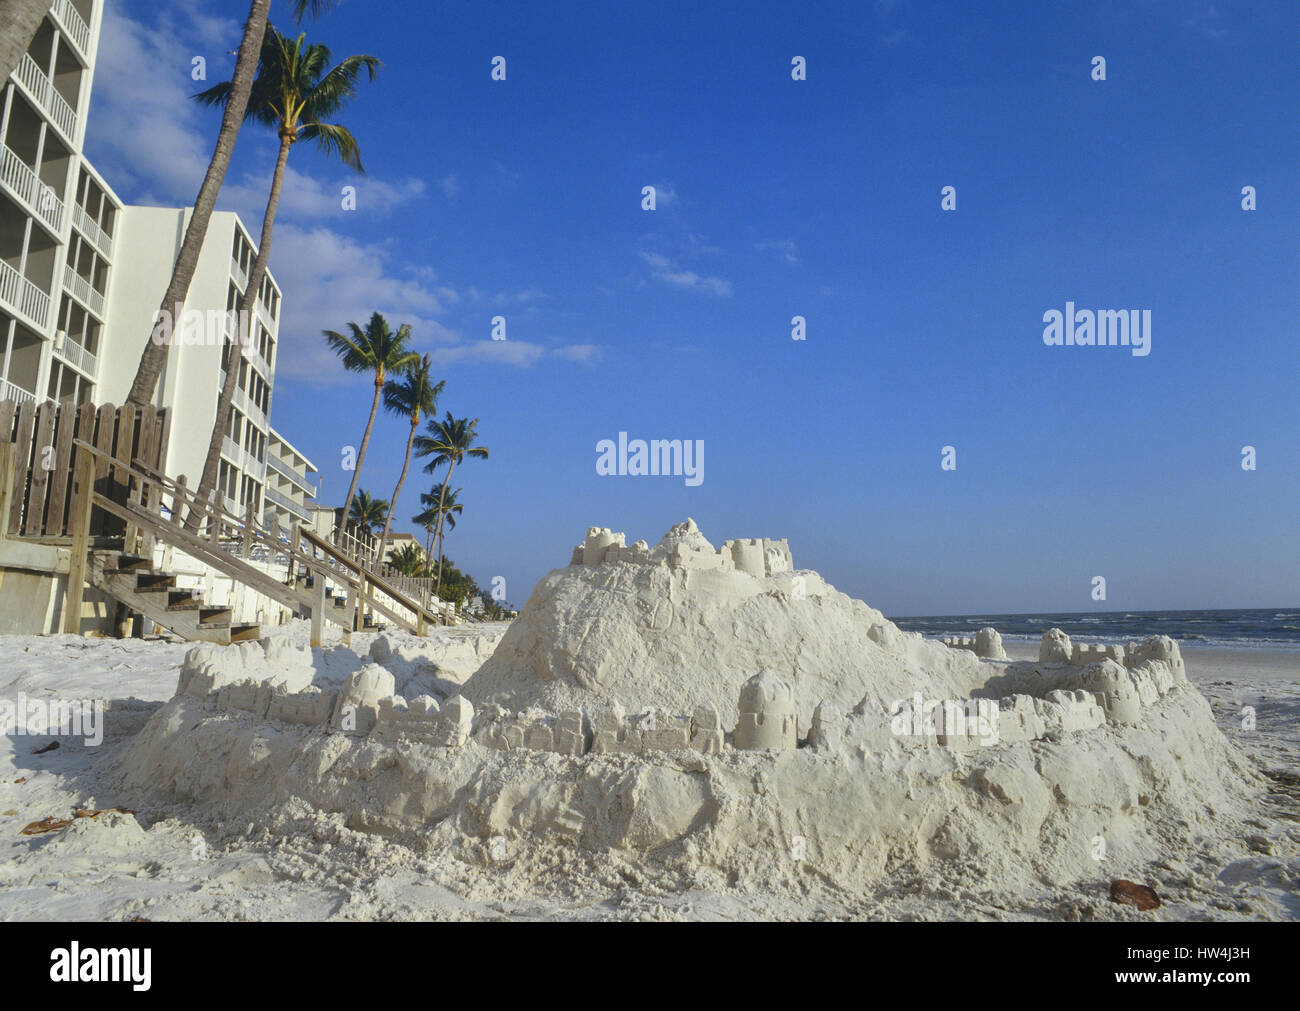 A sandcastle on Fort Myers beach. Florida. USA Stock Photo